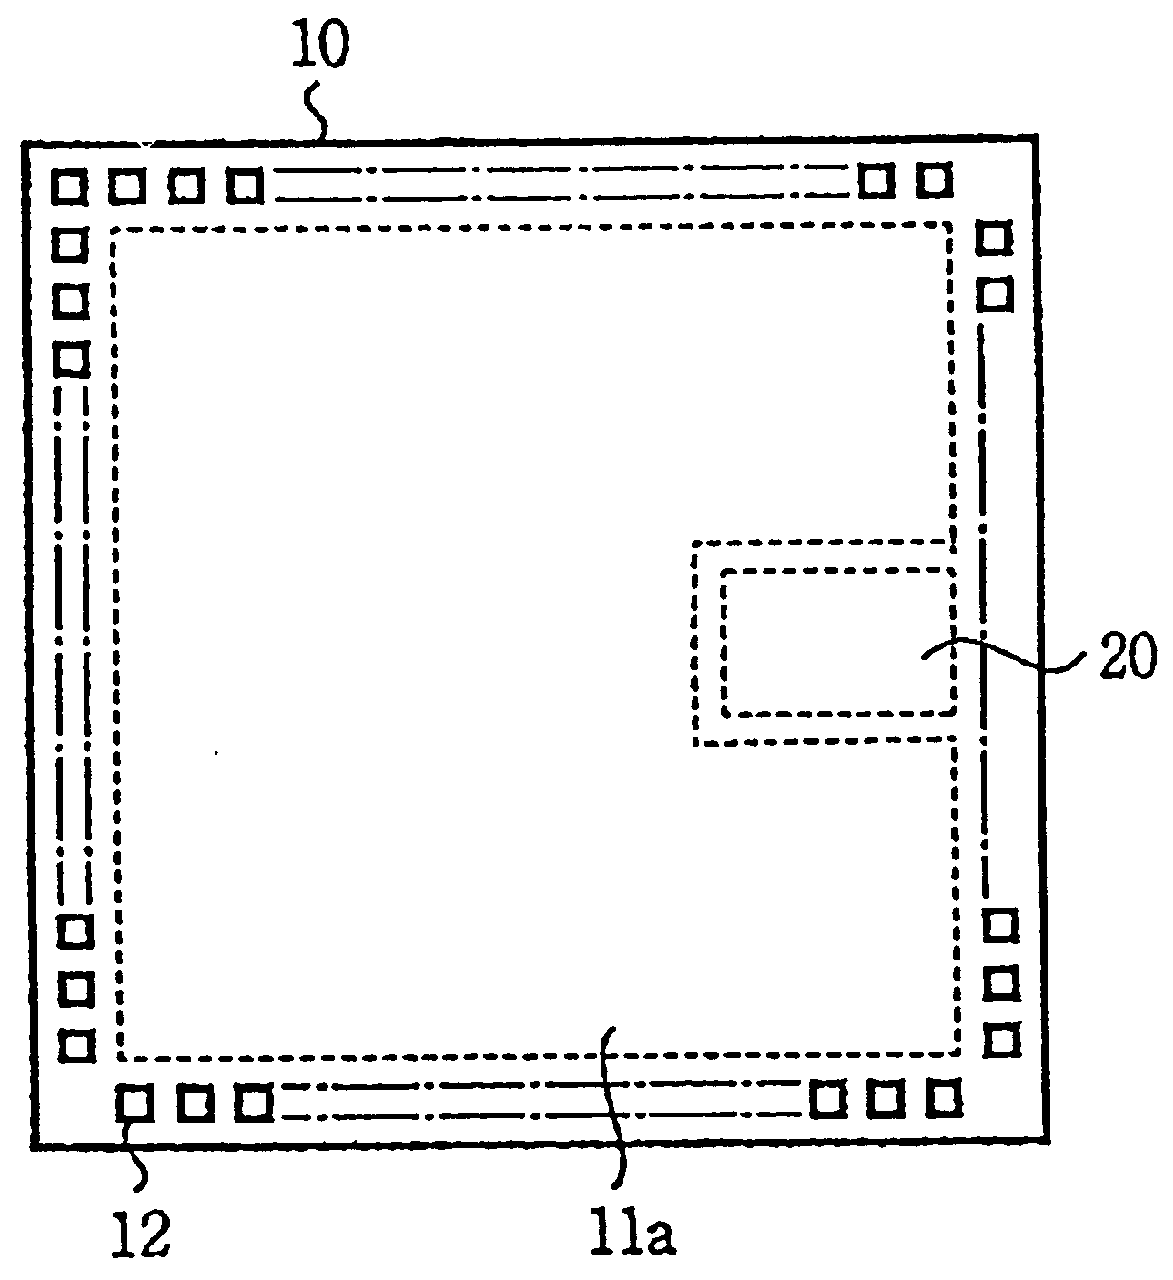 Semiconductor integrated circuit having standard and custom circuit regions